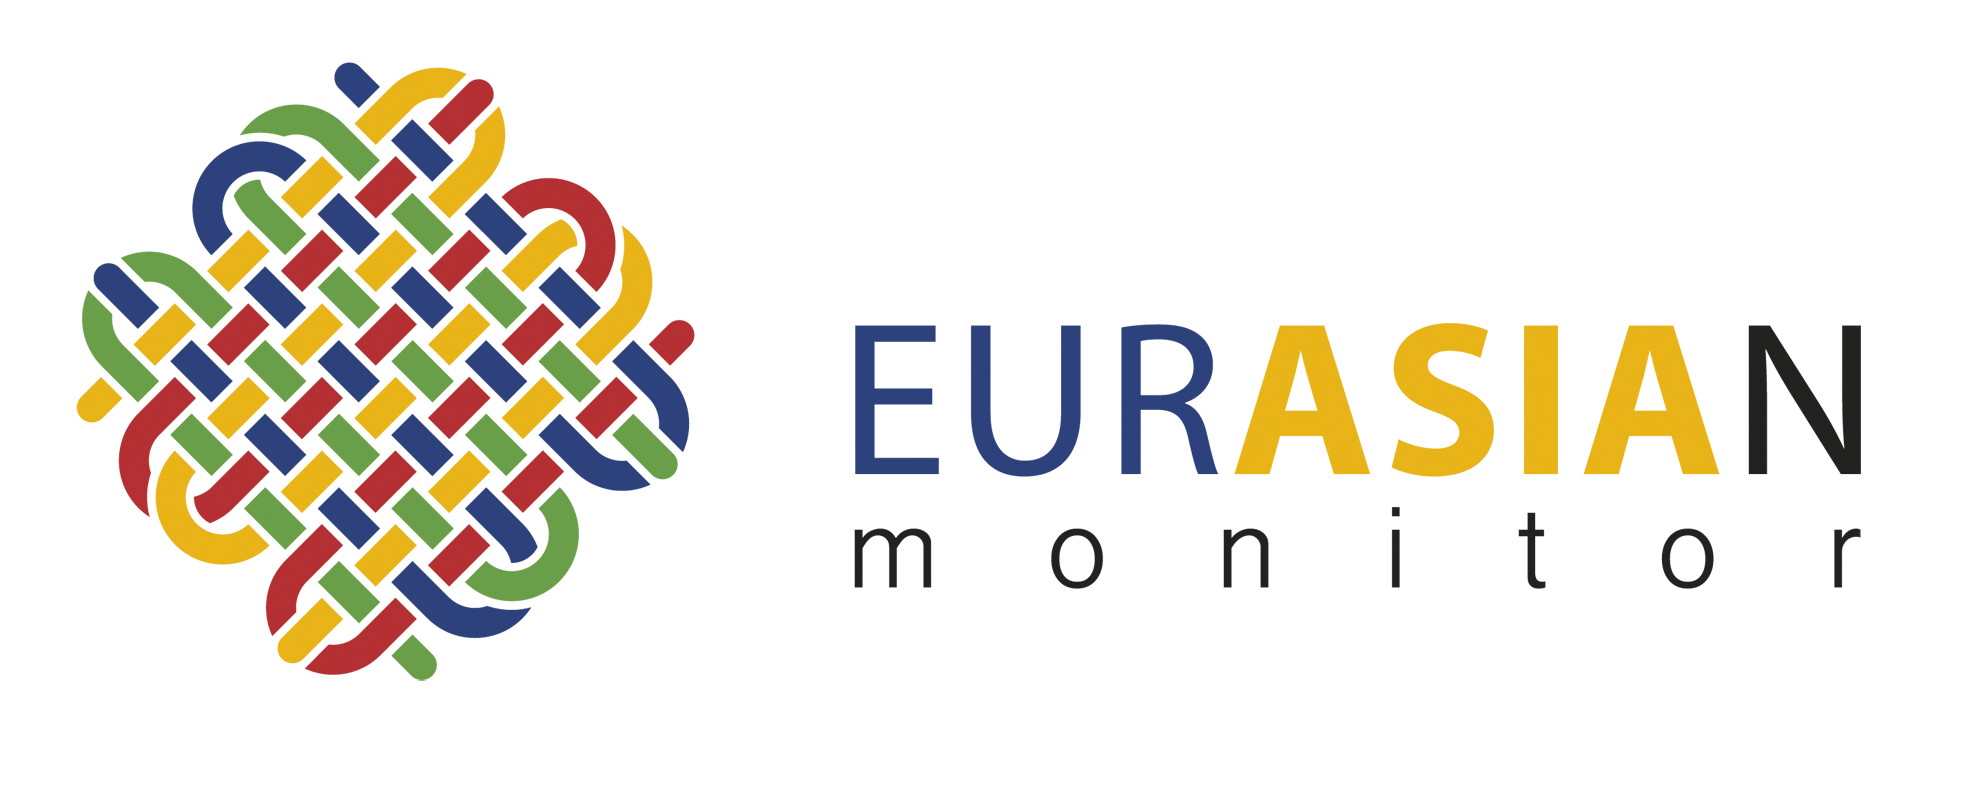 Инг евразия. Евразийский монитор. Логотип Eurasia. Евразийский Логос. Евразийский магазин логотип.